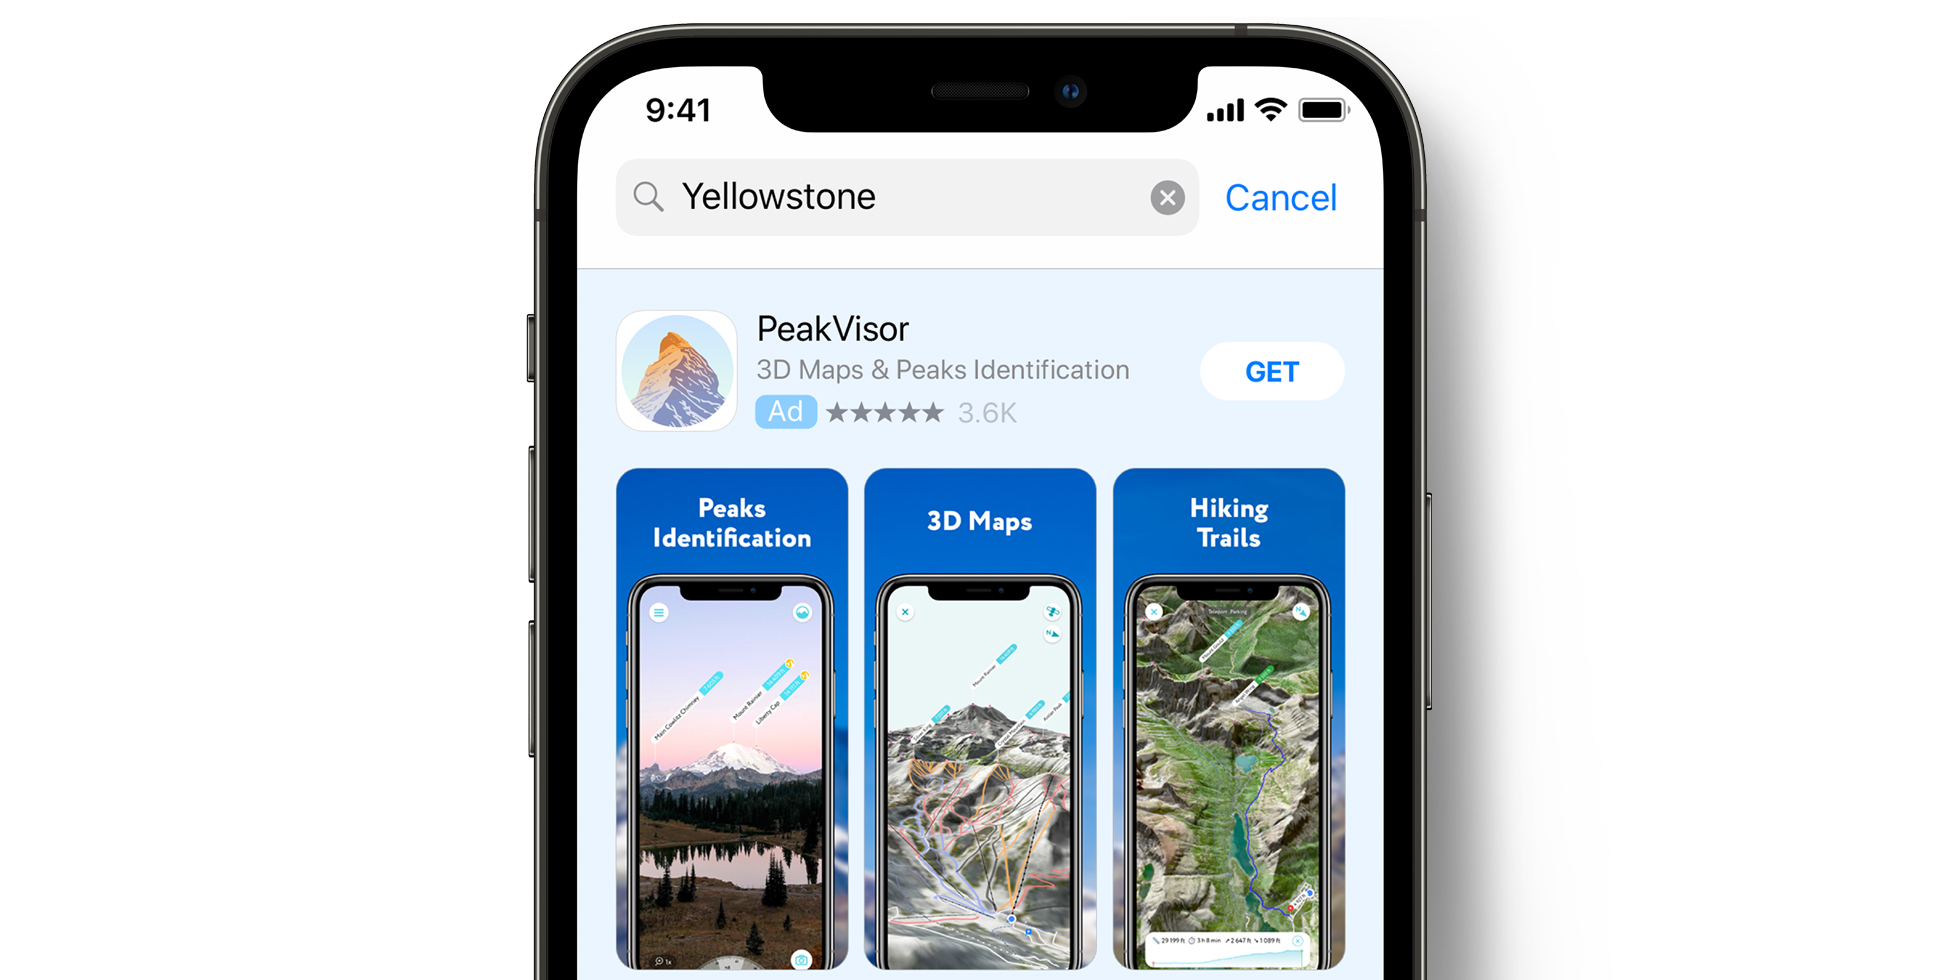 Annuncio di PeakVisor nell’App Store